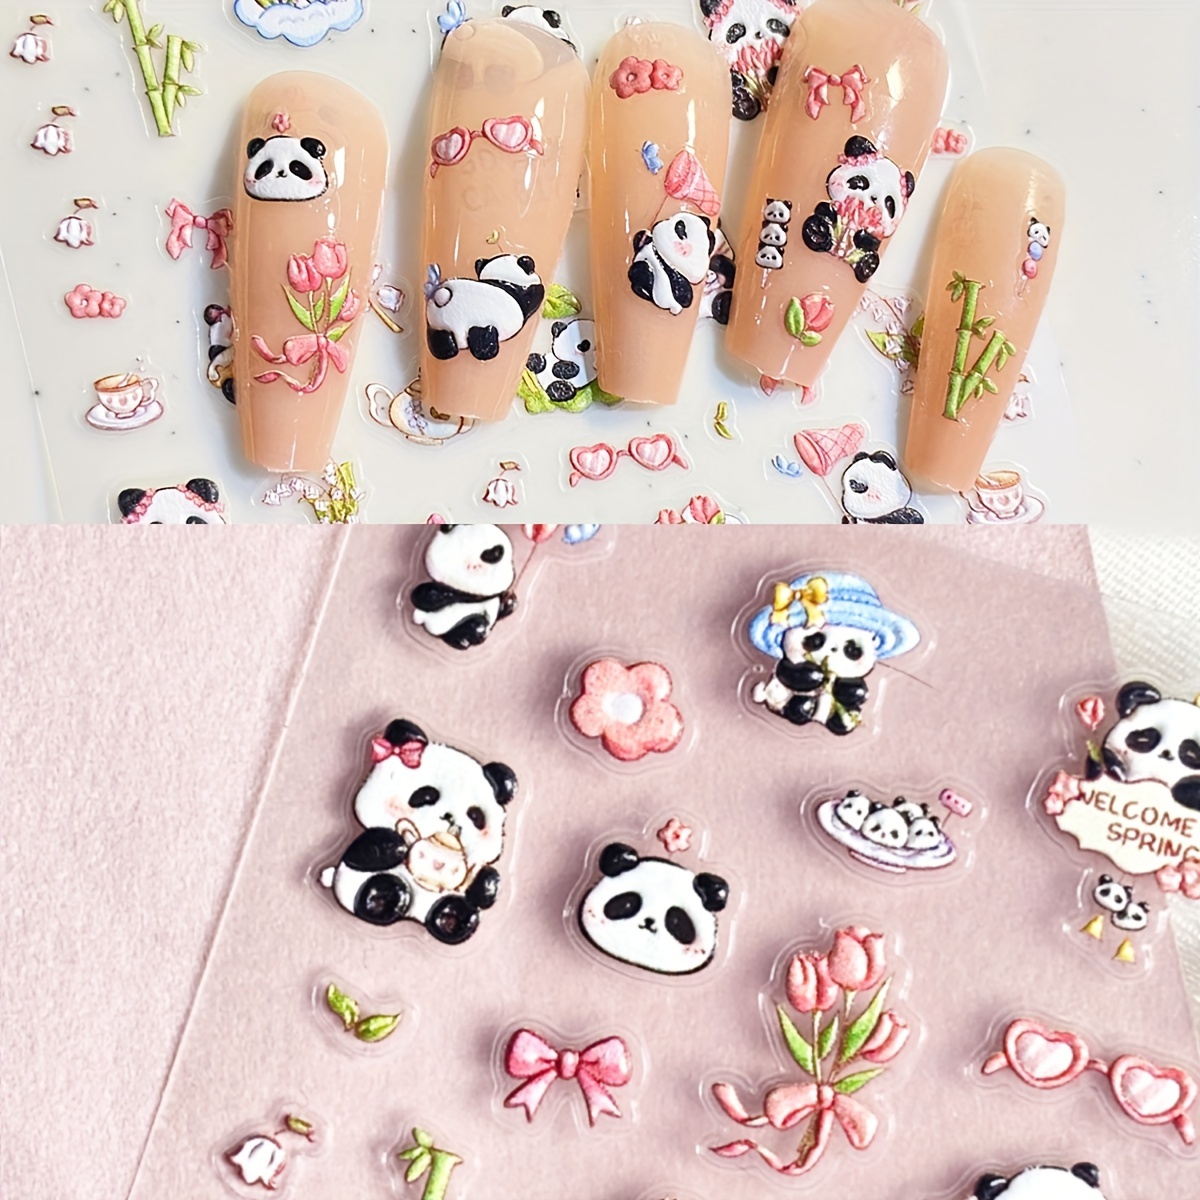 Cute Little Panda Nail Art | Nailzini: A Nail Art Blog